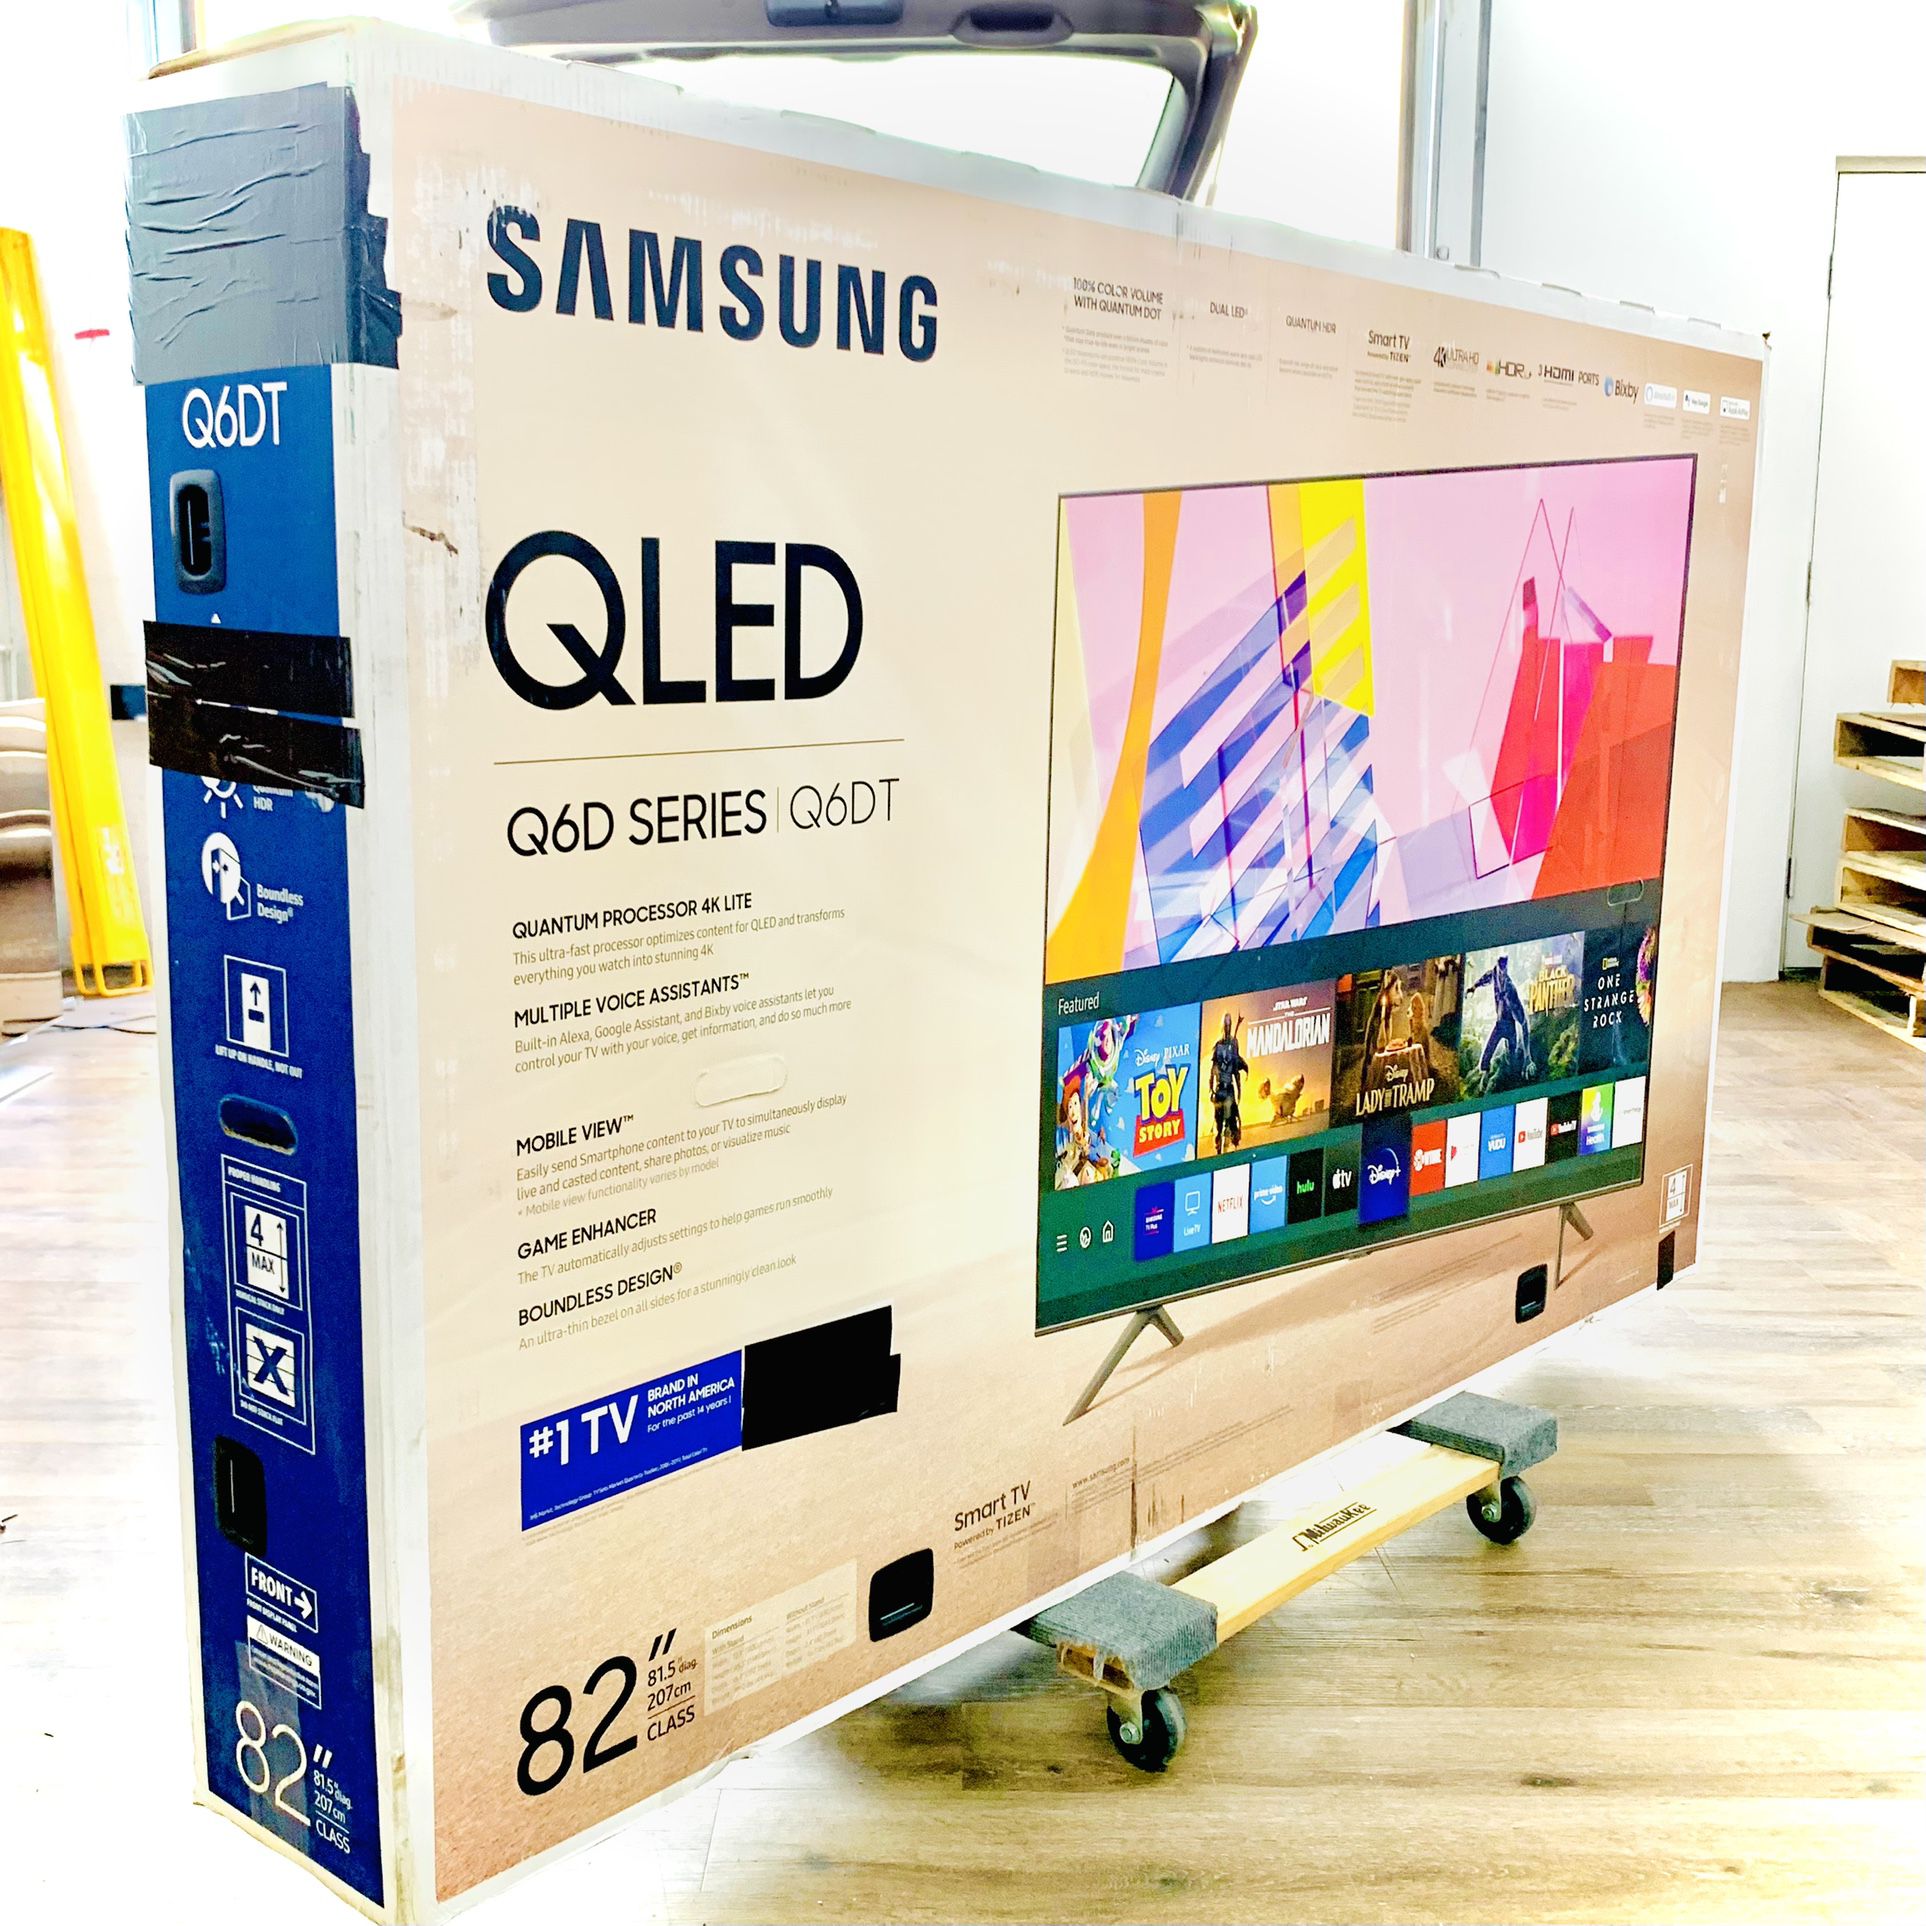 SAMSUNG 82” QLED Q6DT 4K SMART TV - QUANTUM DOT - HDR PREMIUM - $50 DOWN TAKE IT HOME